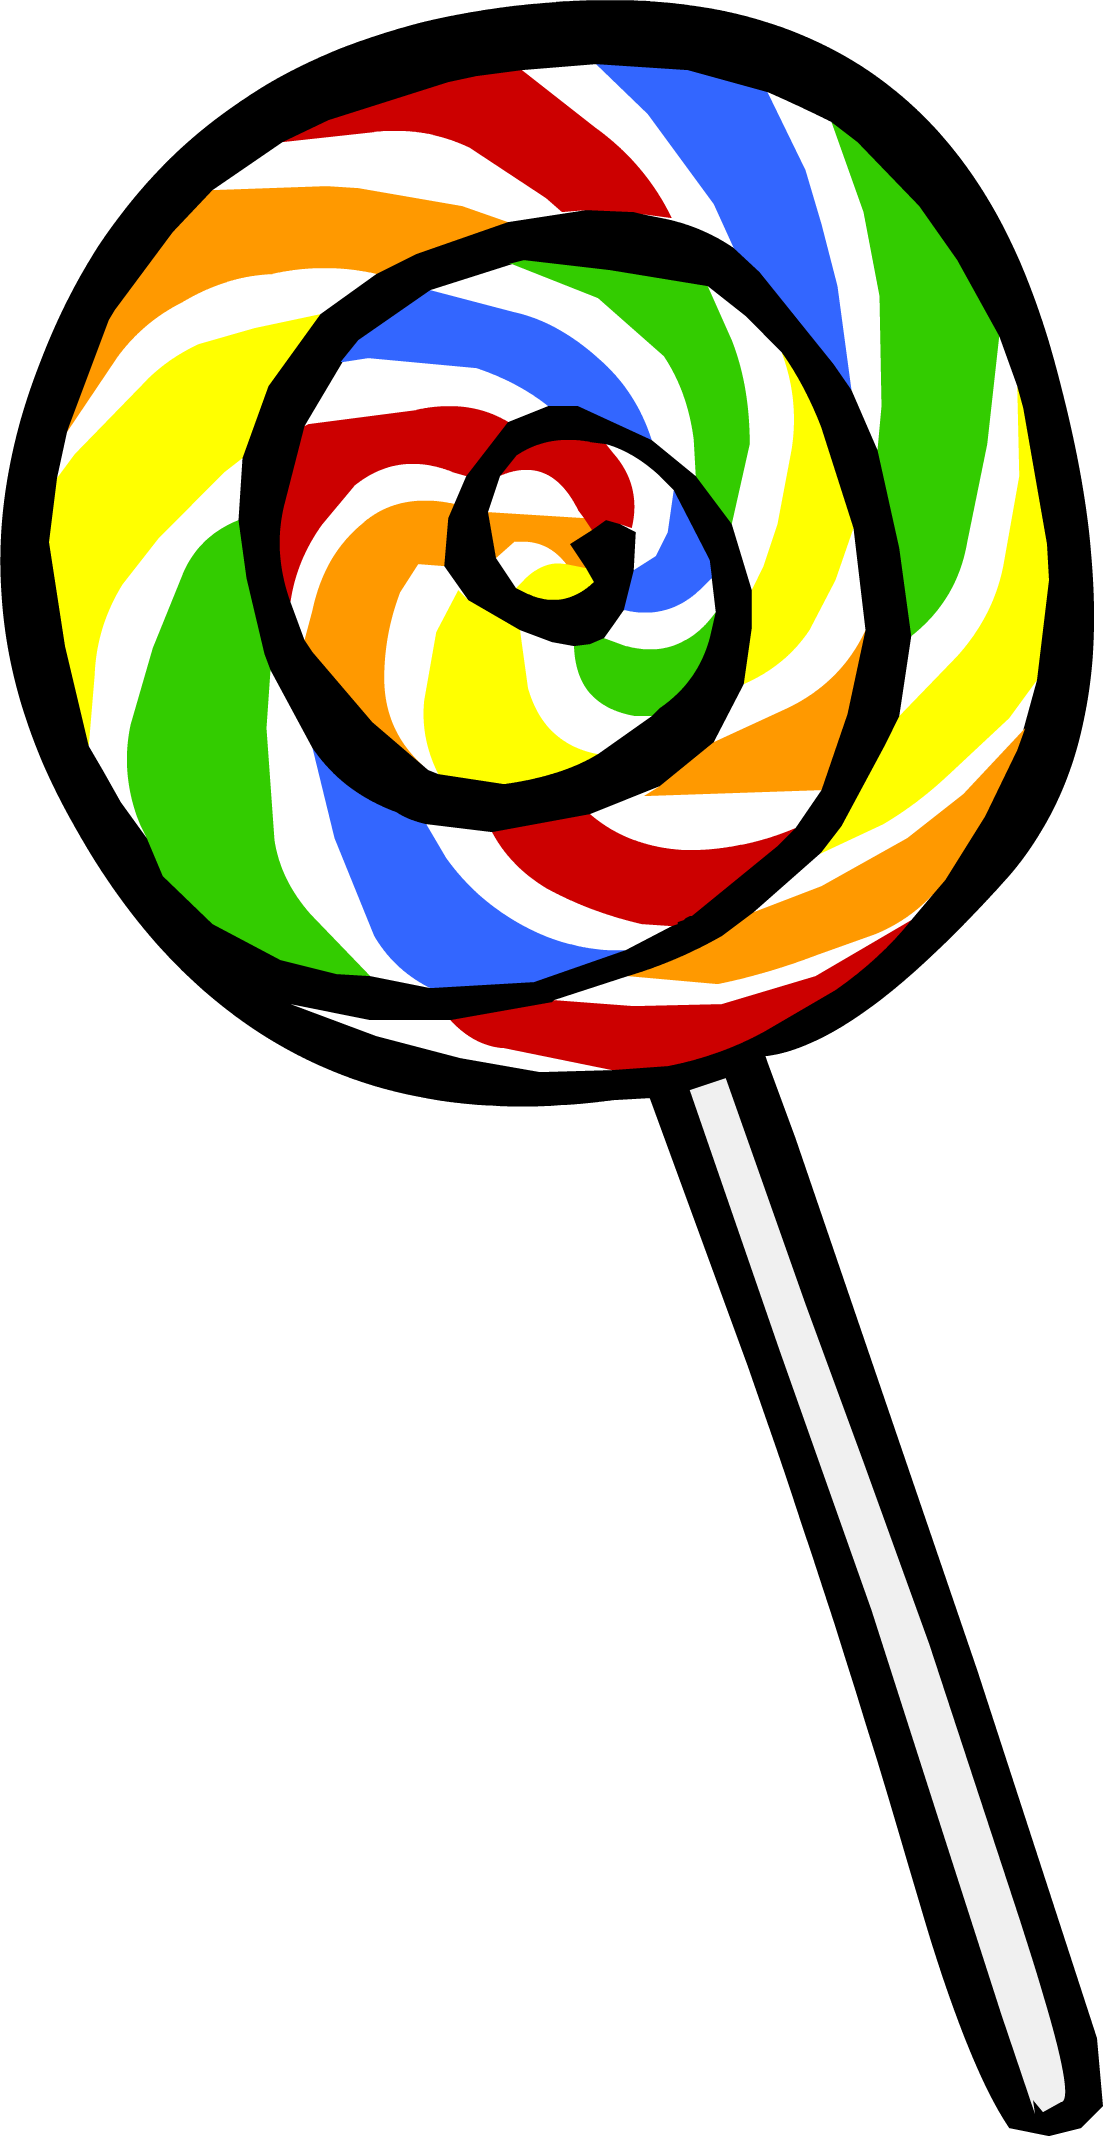 09, May 21, 2014 - Lollipop Clipart (1103x2136)